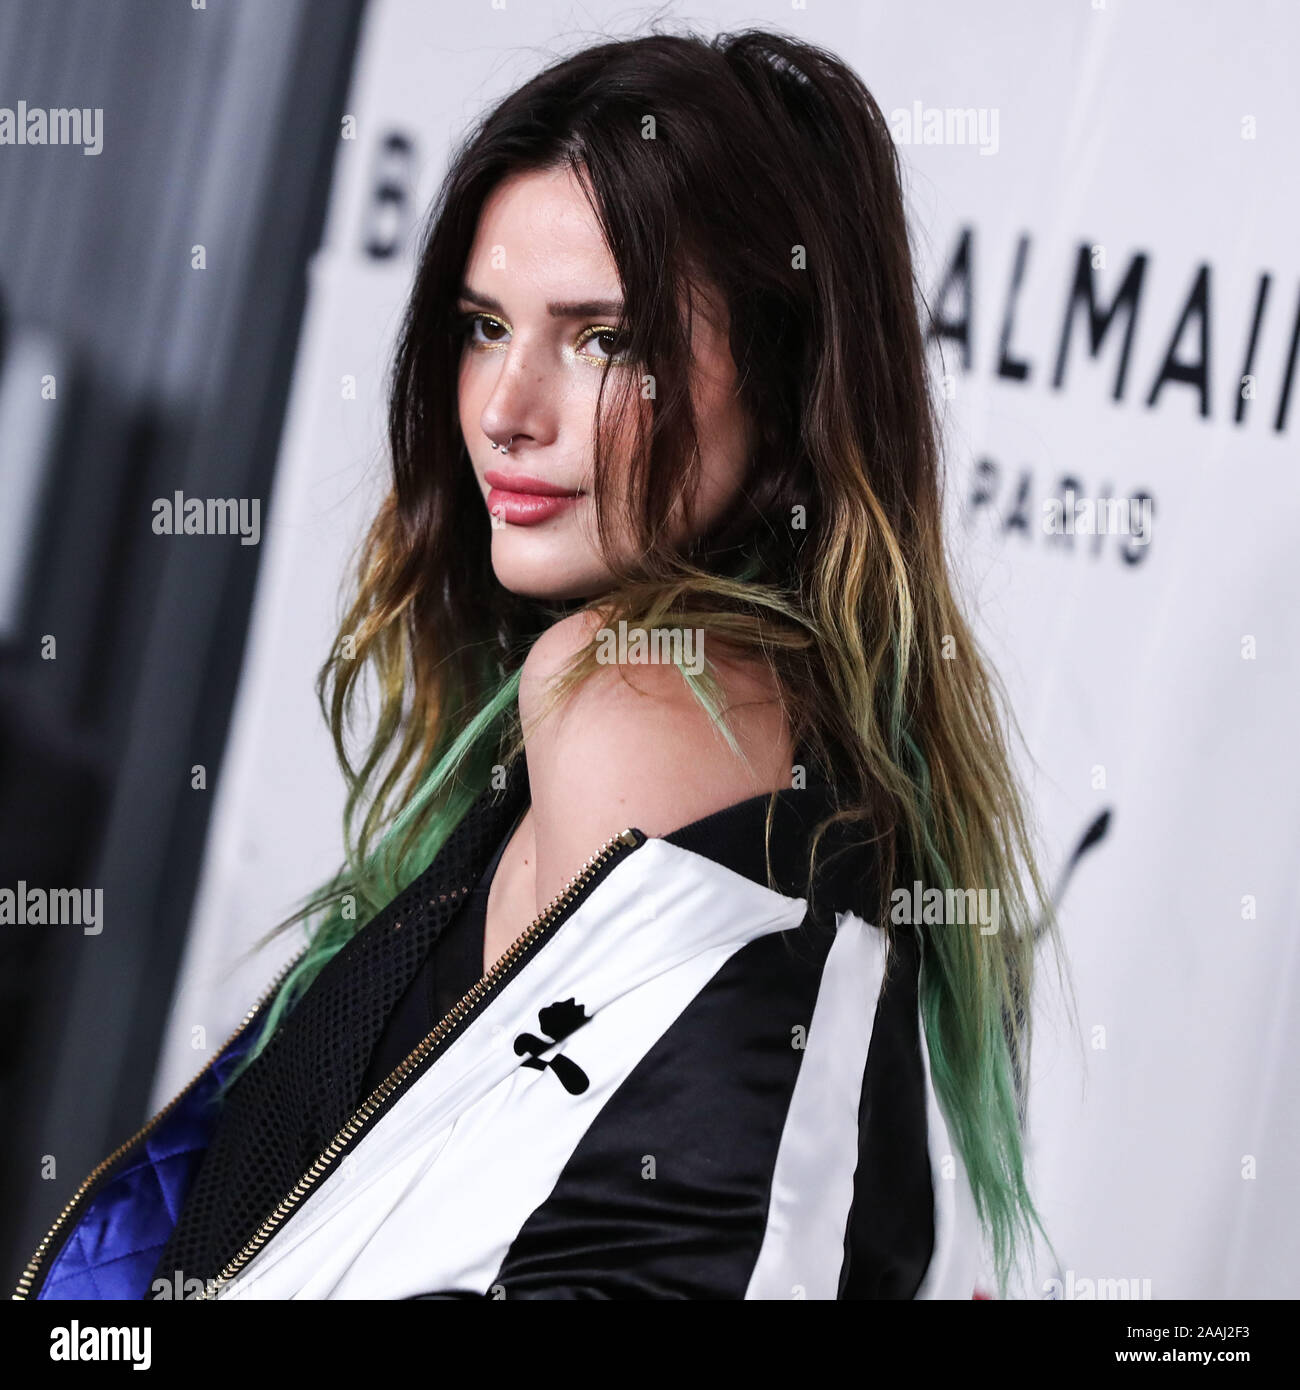 HOLLYWOOD, LOS ANGELES, CALIFORNIA, USA - NOVEMBER 21: Actress Bella Thorne  arrives at the PUMA x Balmain Los Angeles Launch Event held at Milk Studios  on November 21, 2019 in Hollywood, Los